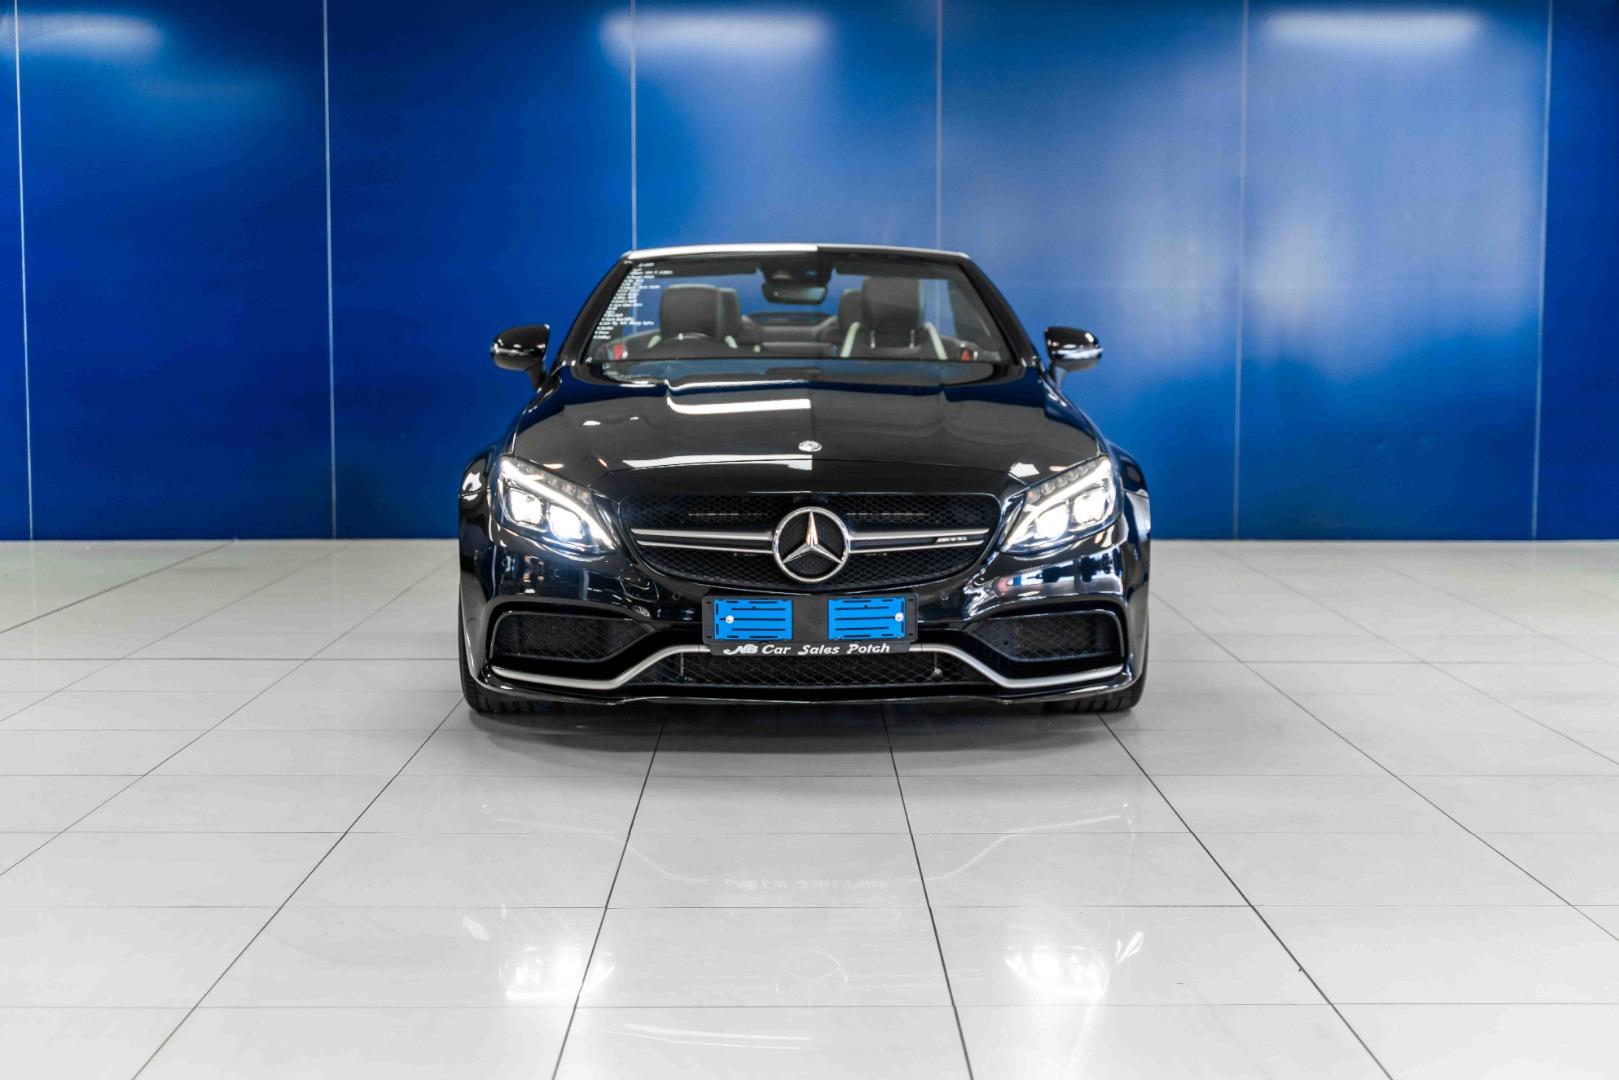 Mercedes-AMG C-Class